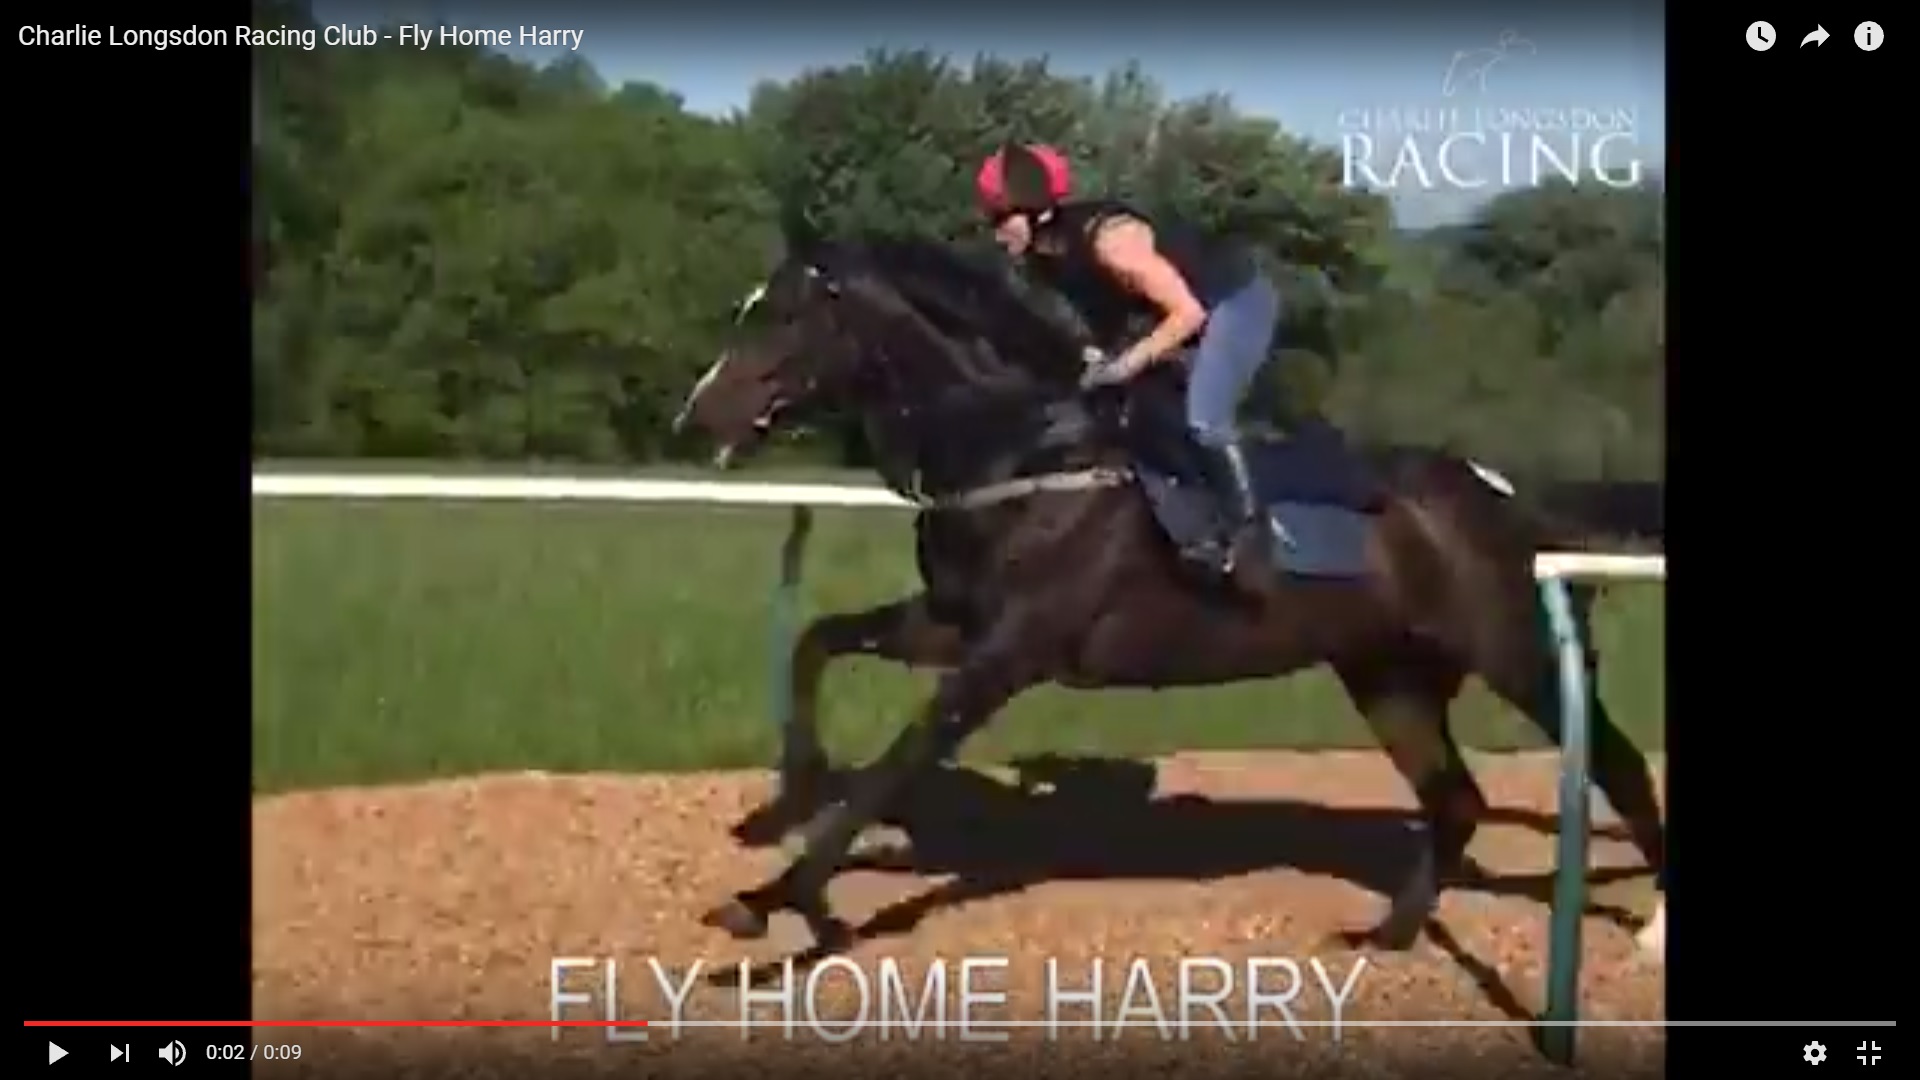 Fly Home Harry - The Charlie Longsdon Racing Club